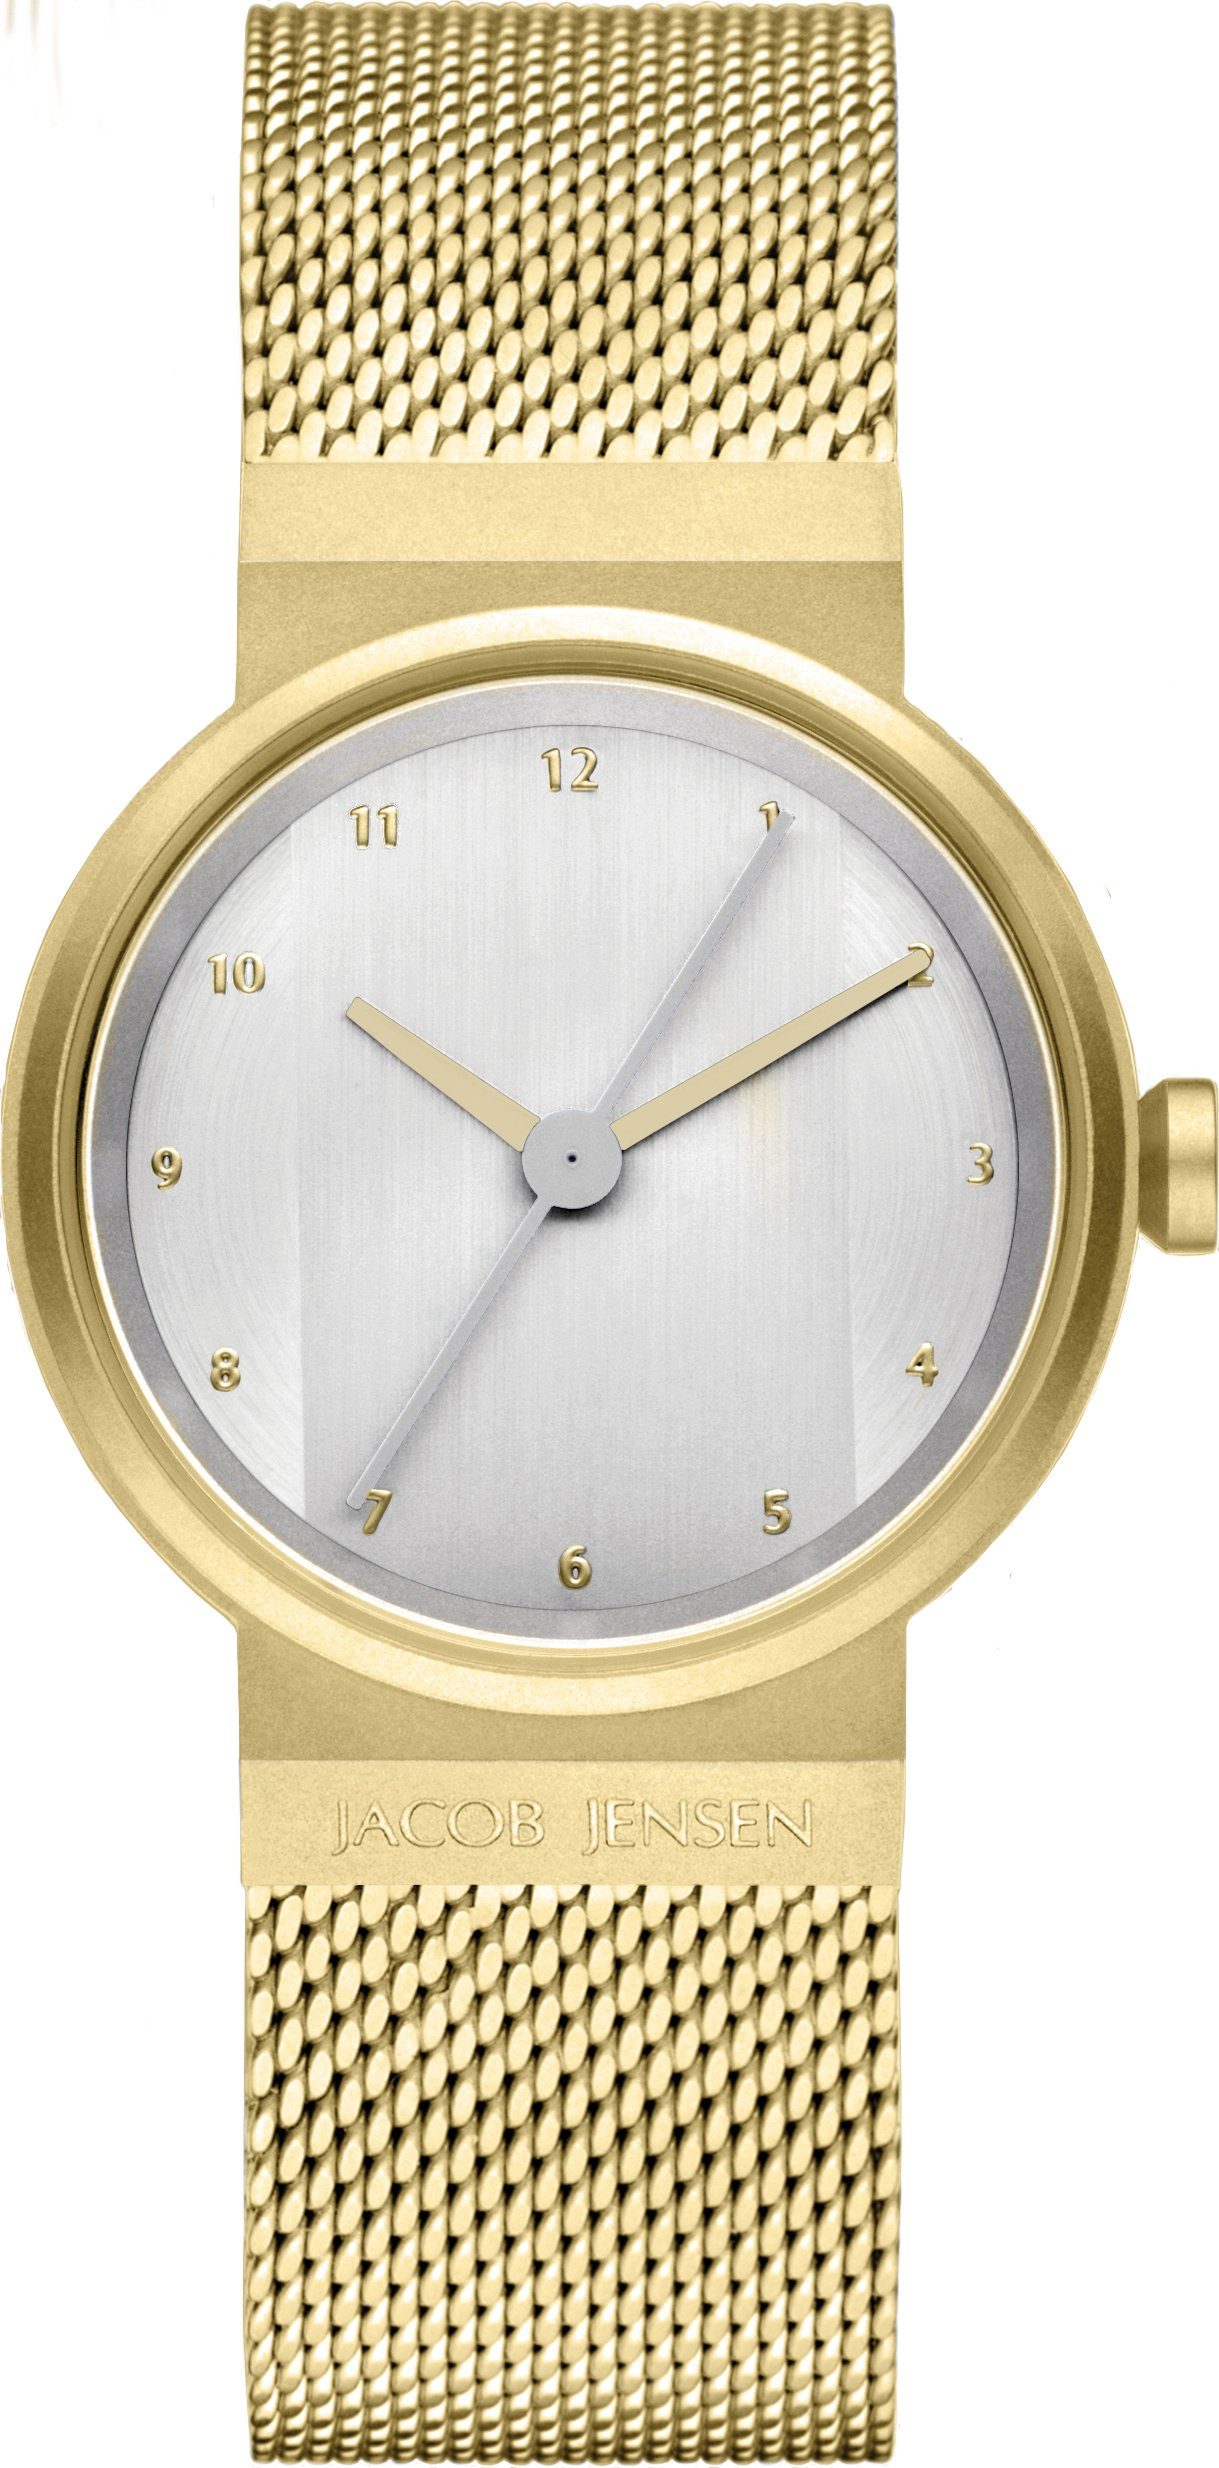 NEW Sekundenzeiger Edelstahl Jacob extra ⌀29mm, gold Uhrband Damenuhr LINE Jensen Design Quarzuhr langer Milanaise